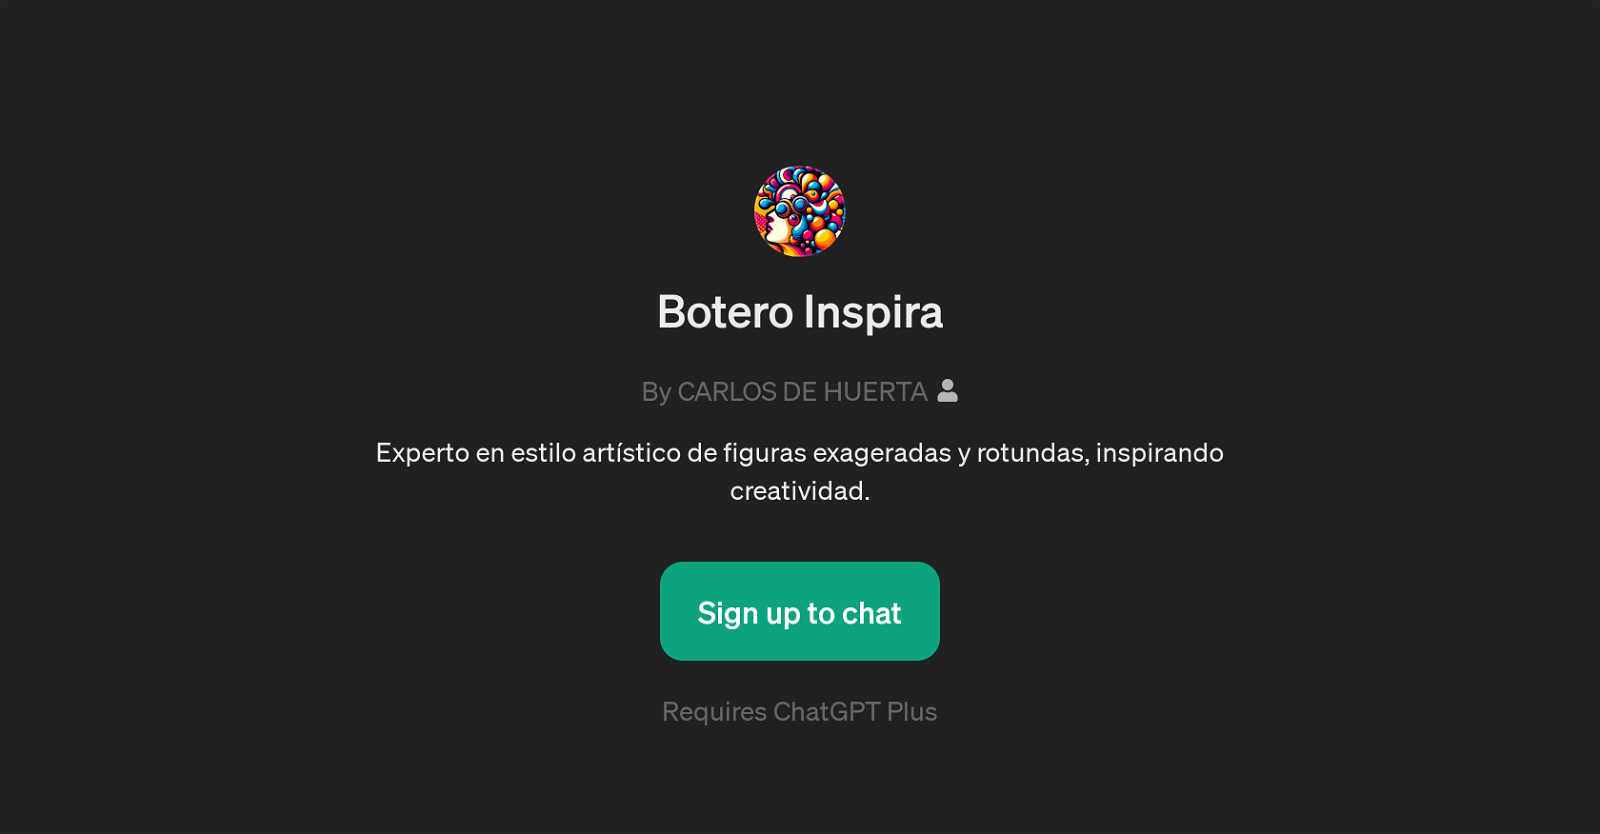 Botero Inspira website